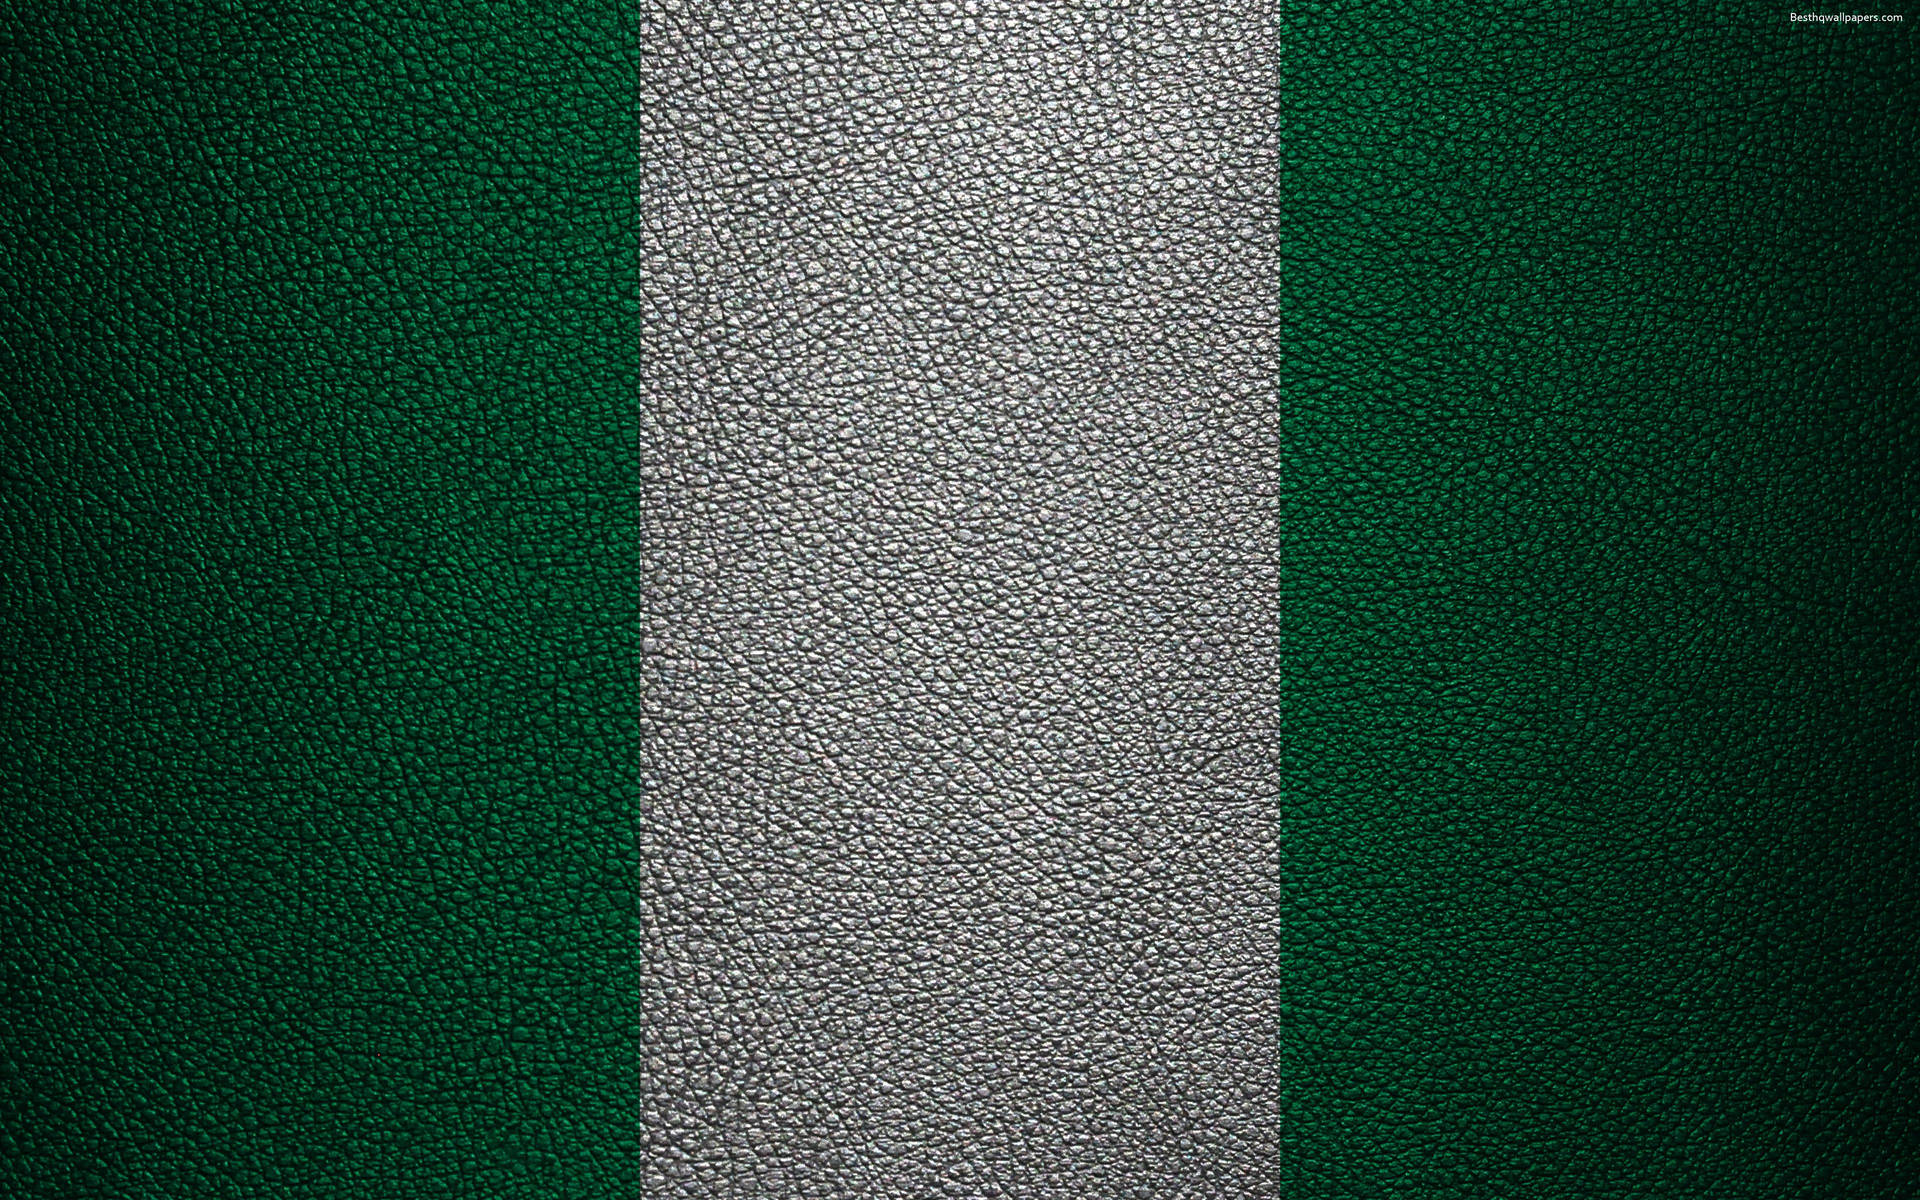 Nigeria Textured Flag Wallpaper